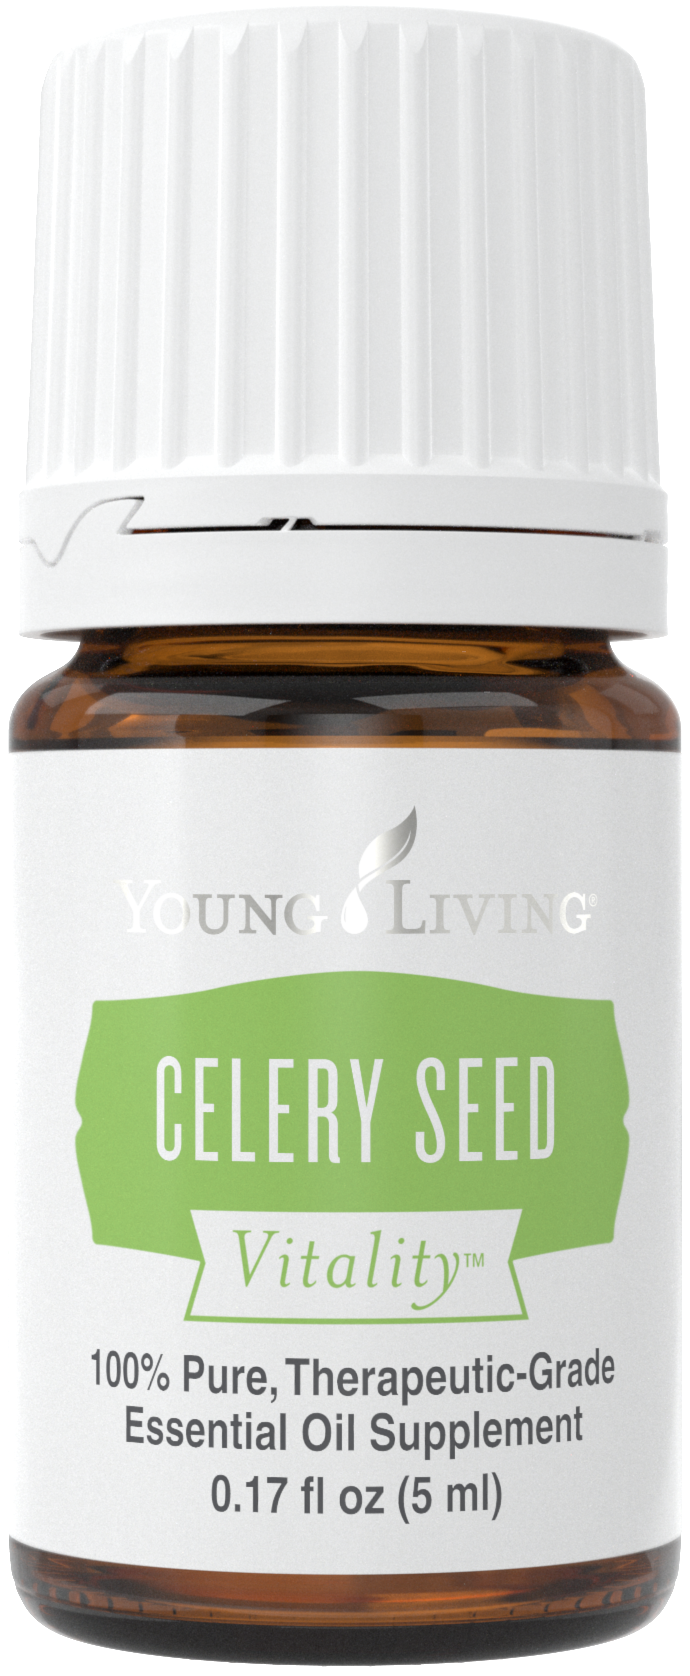 Celery Seed Vitality Silo.png